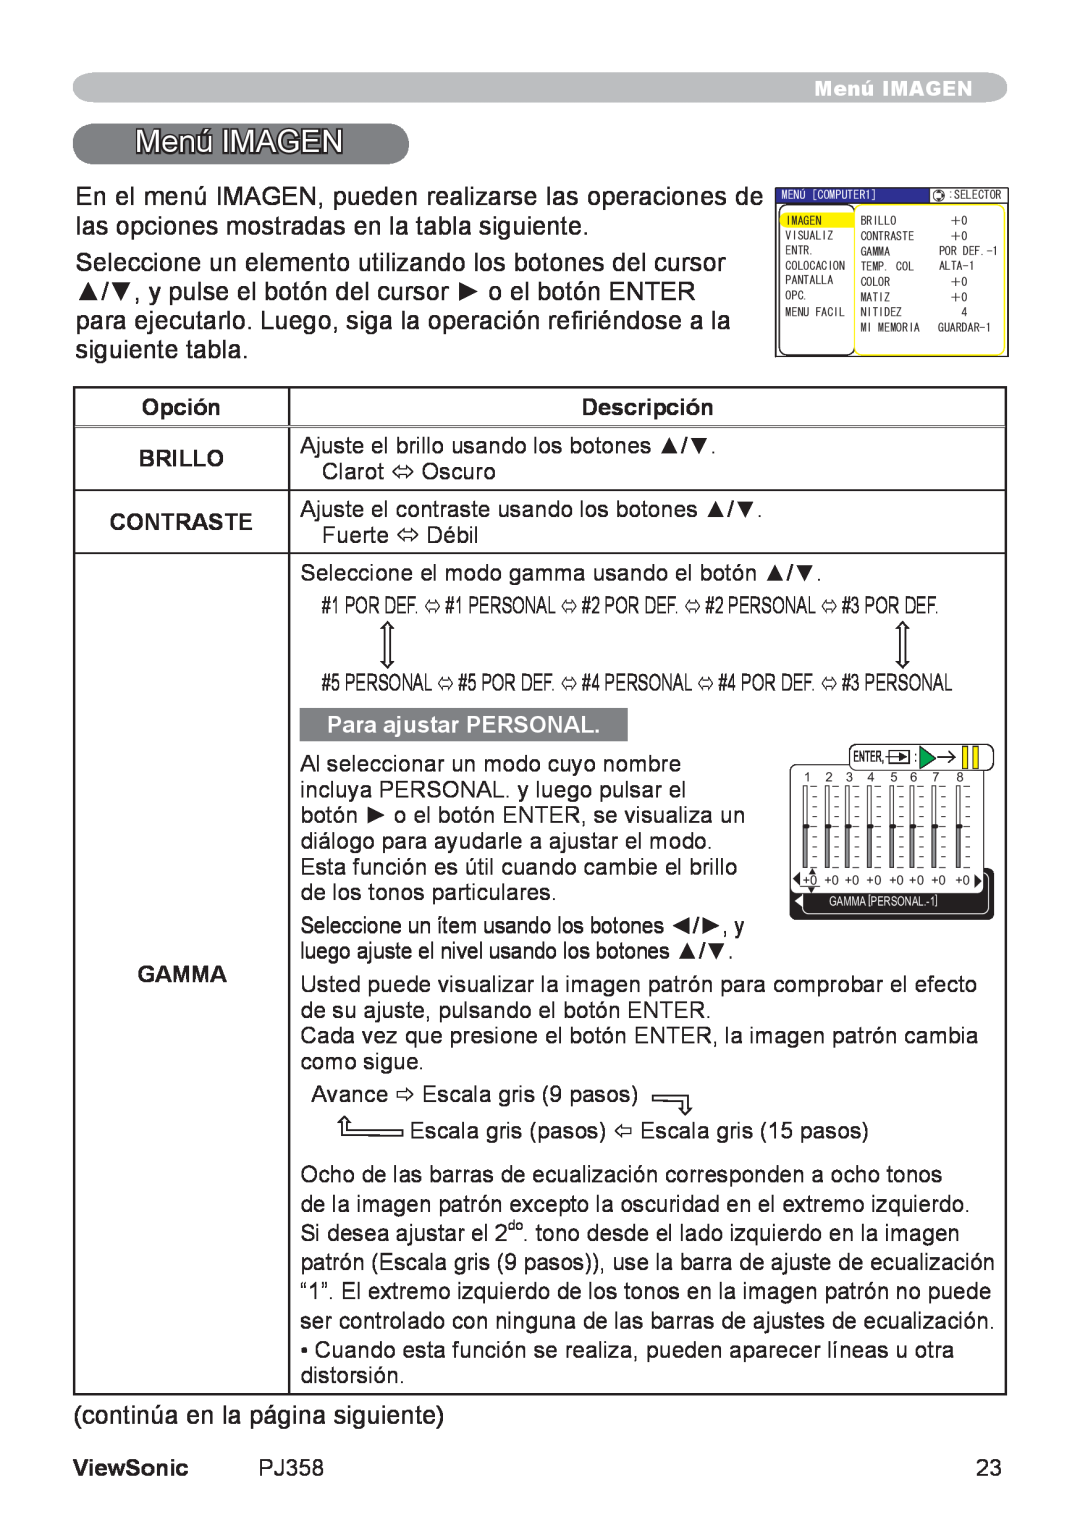 ViewSonic VS11611, PJ358 manual Menú IMAGEN, Para ajustar PERSONAL 